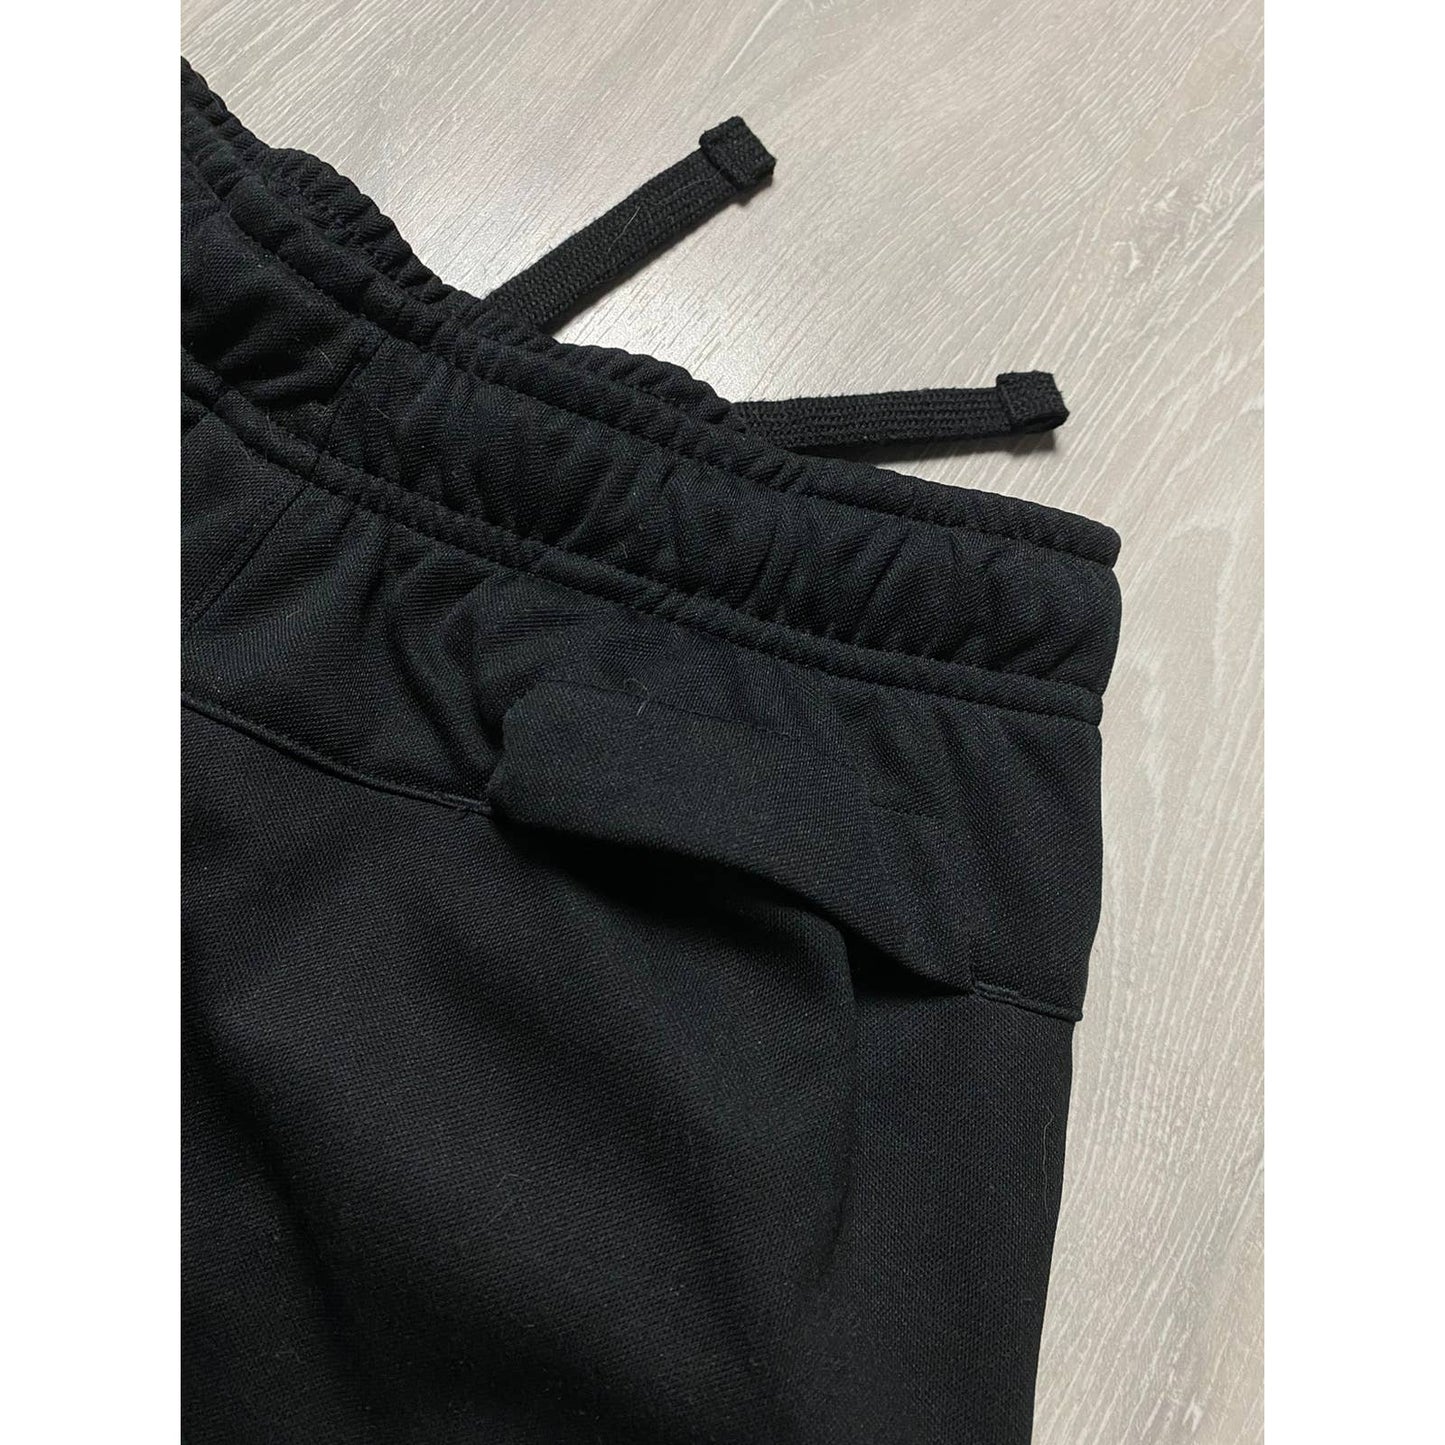 Nike vintage black sweatpants spell out big logo